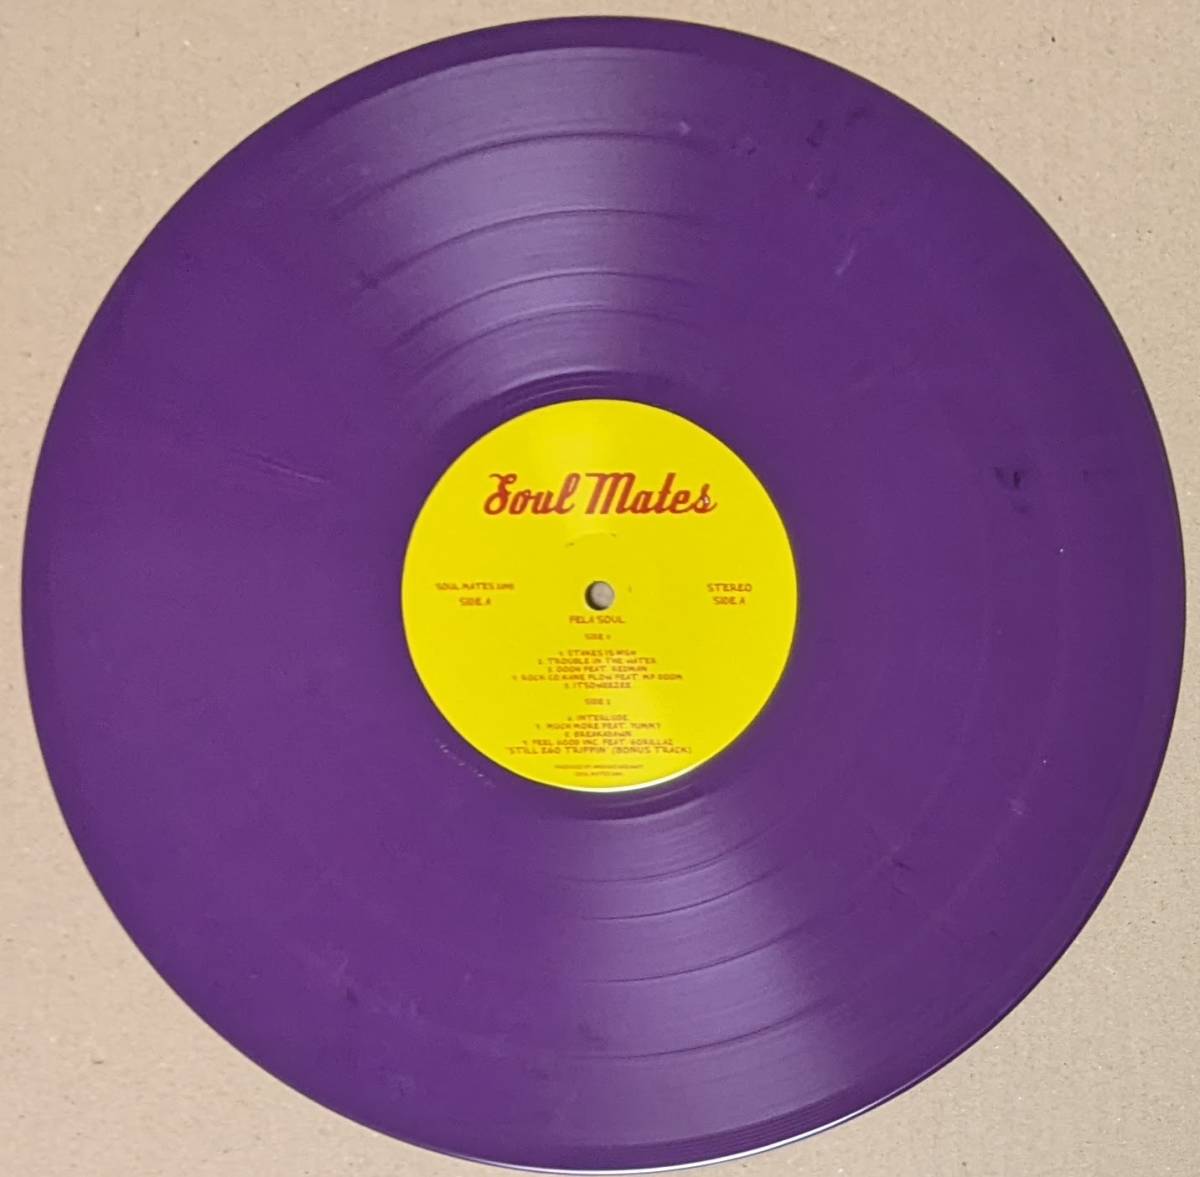 Amerigo Gazaway - Fela Kuti vs De La Soul - Fela Soul ボーナス・トラック1曲追加収録限定パープル・カラー・アナログ・レコード